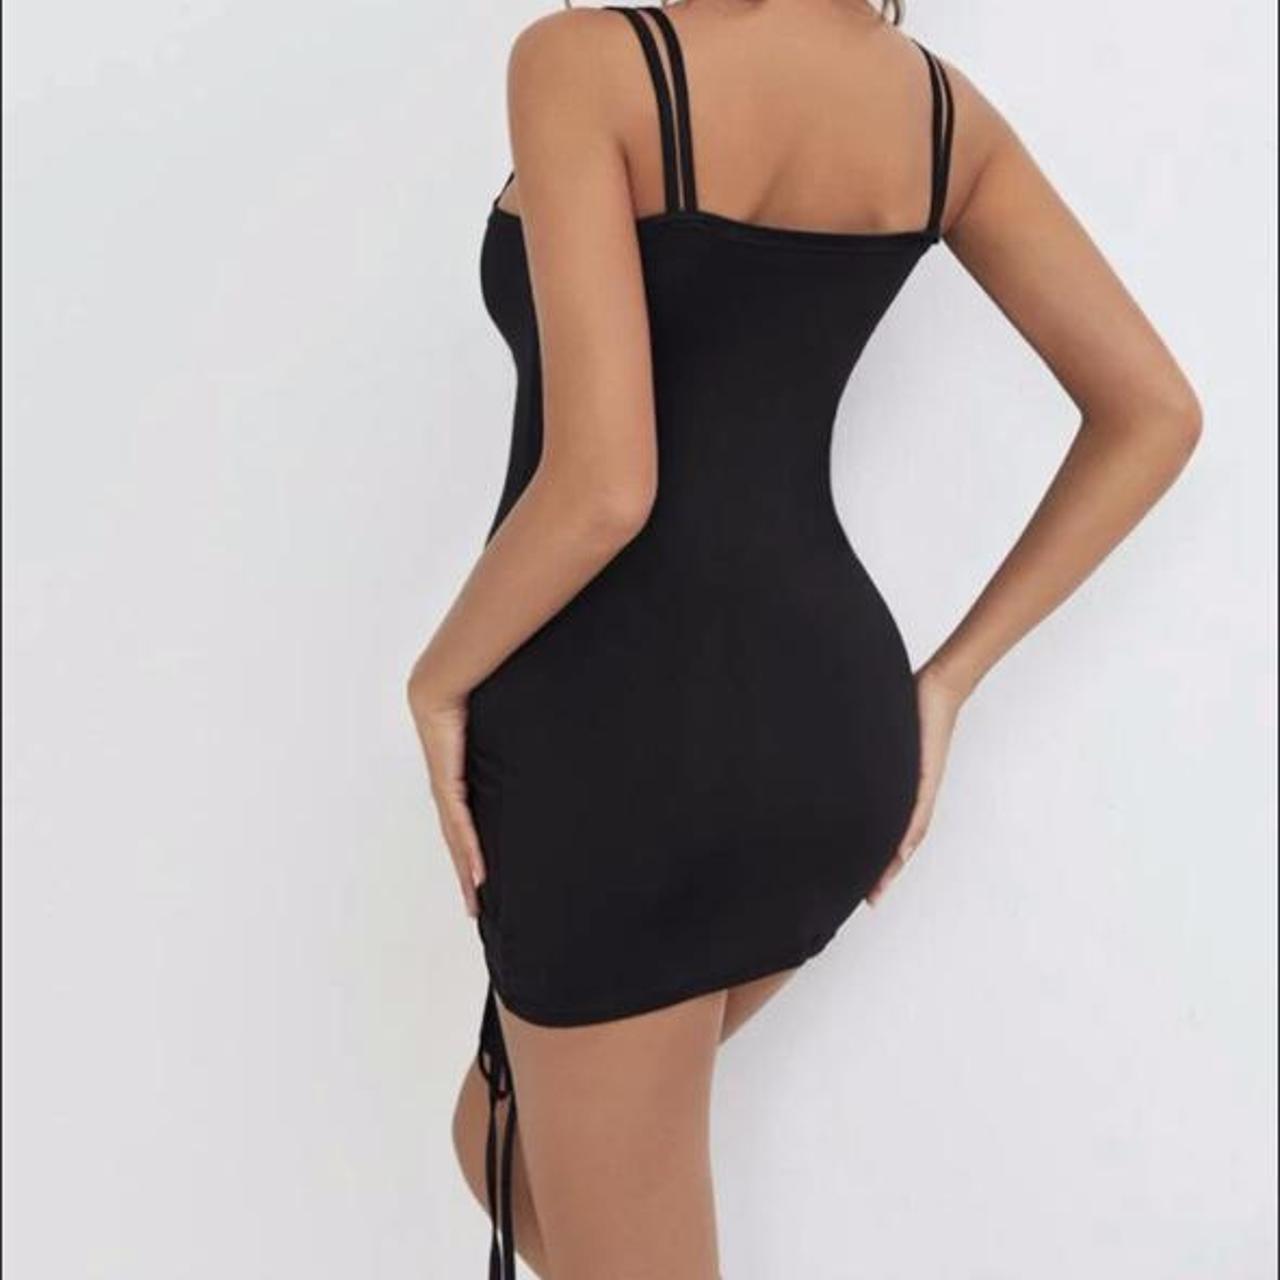 Product Image 2 - Shein black drawstring dress size